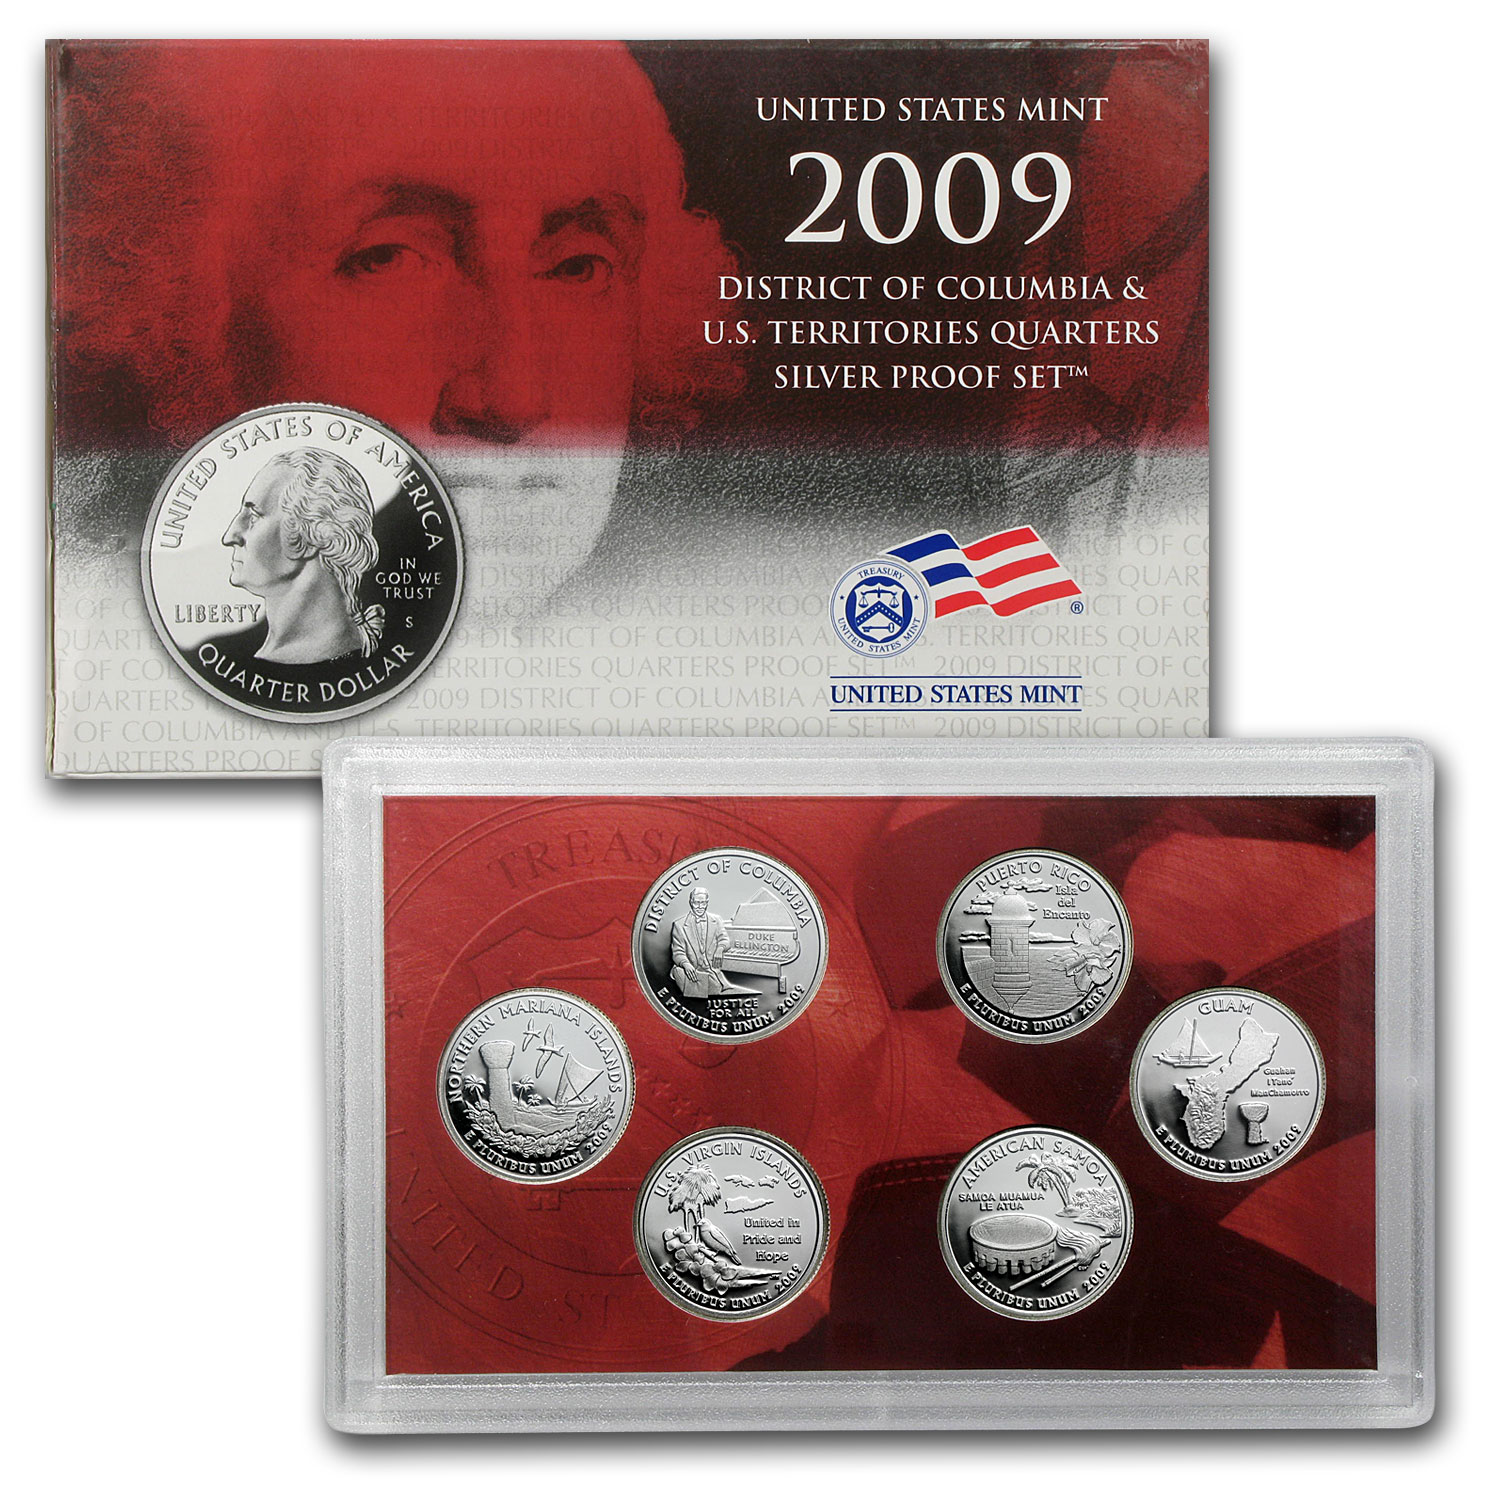 Buy 2009 D.C. and U.S. Territories Quarters Proof Set (Silver)